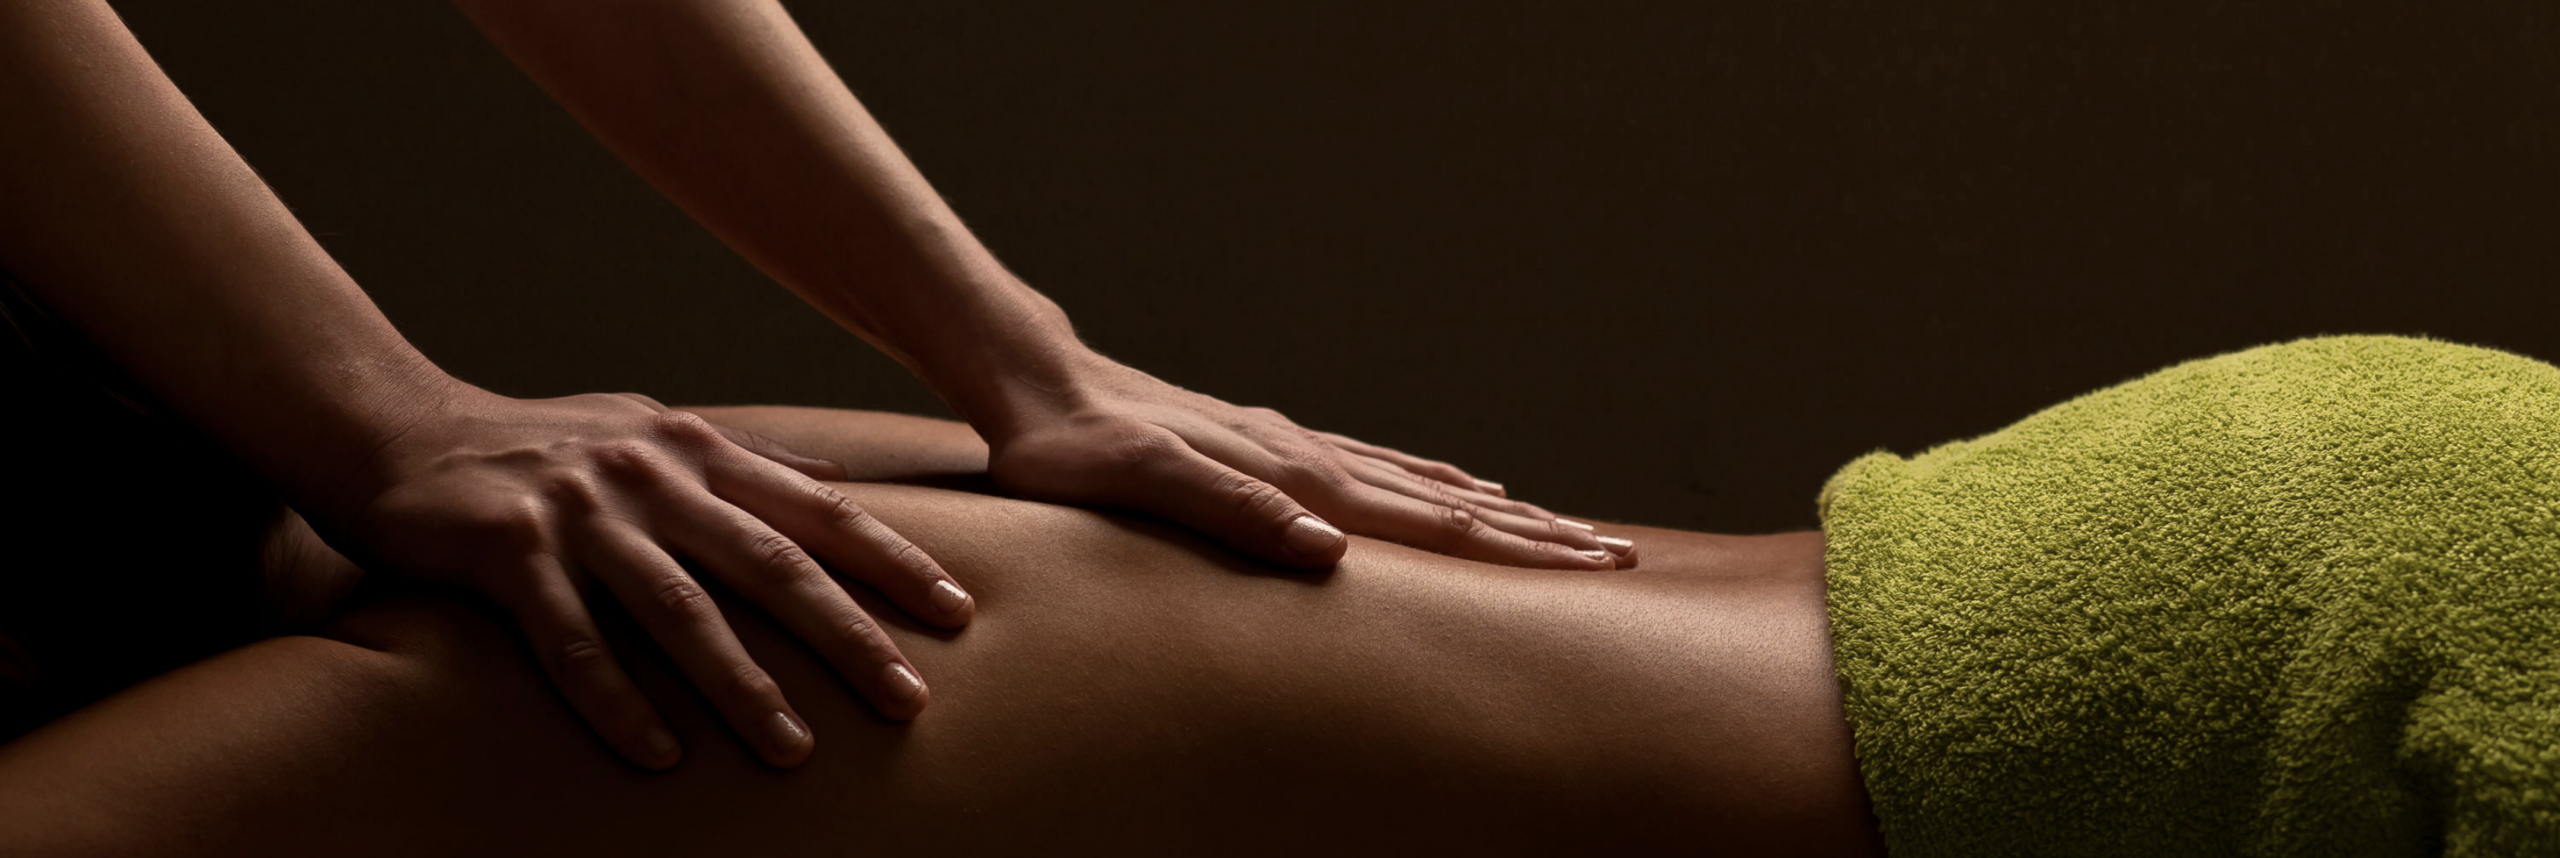 massage pro clinic göteborg billdal hovås